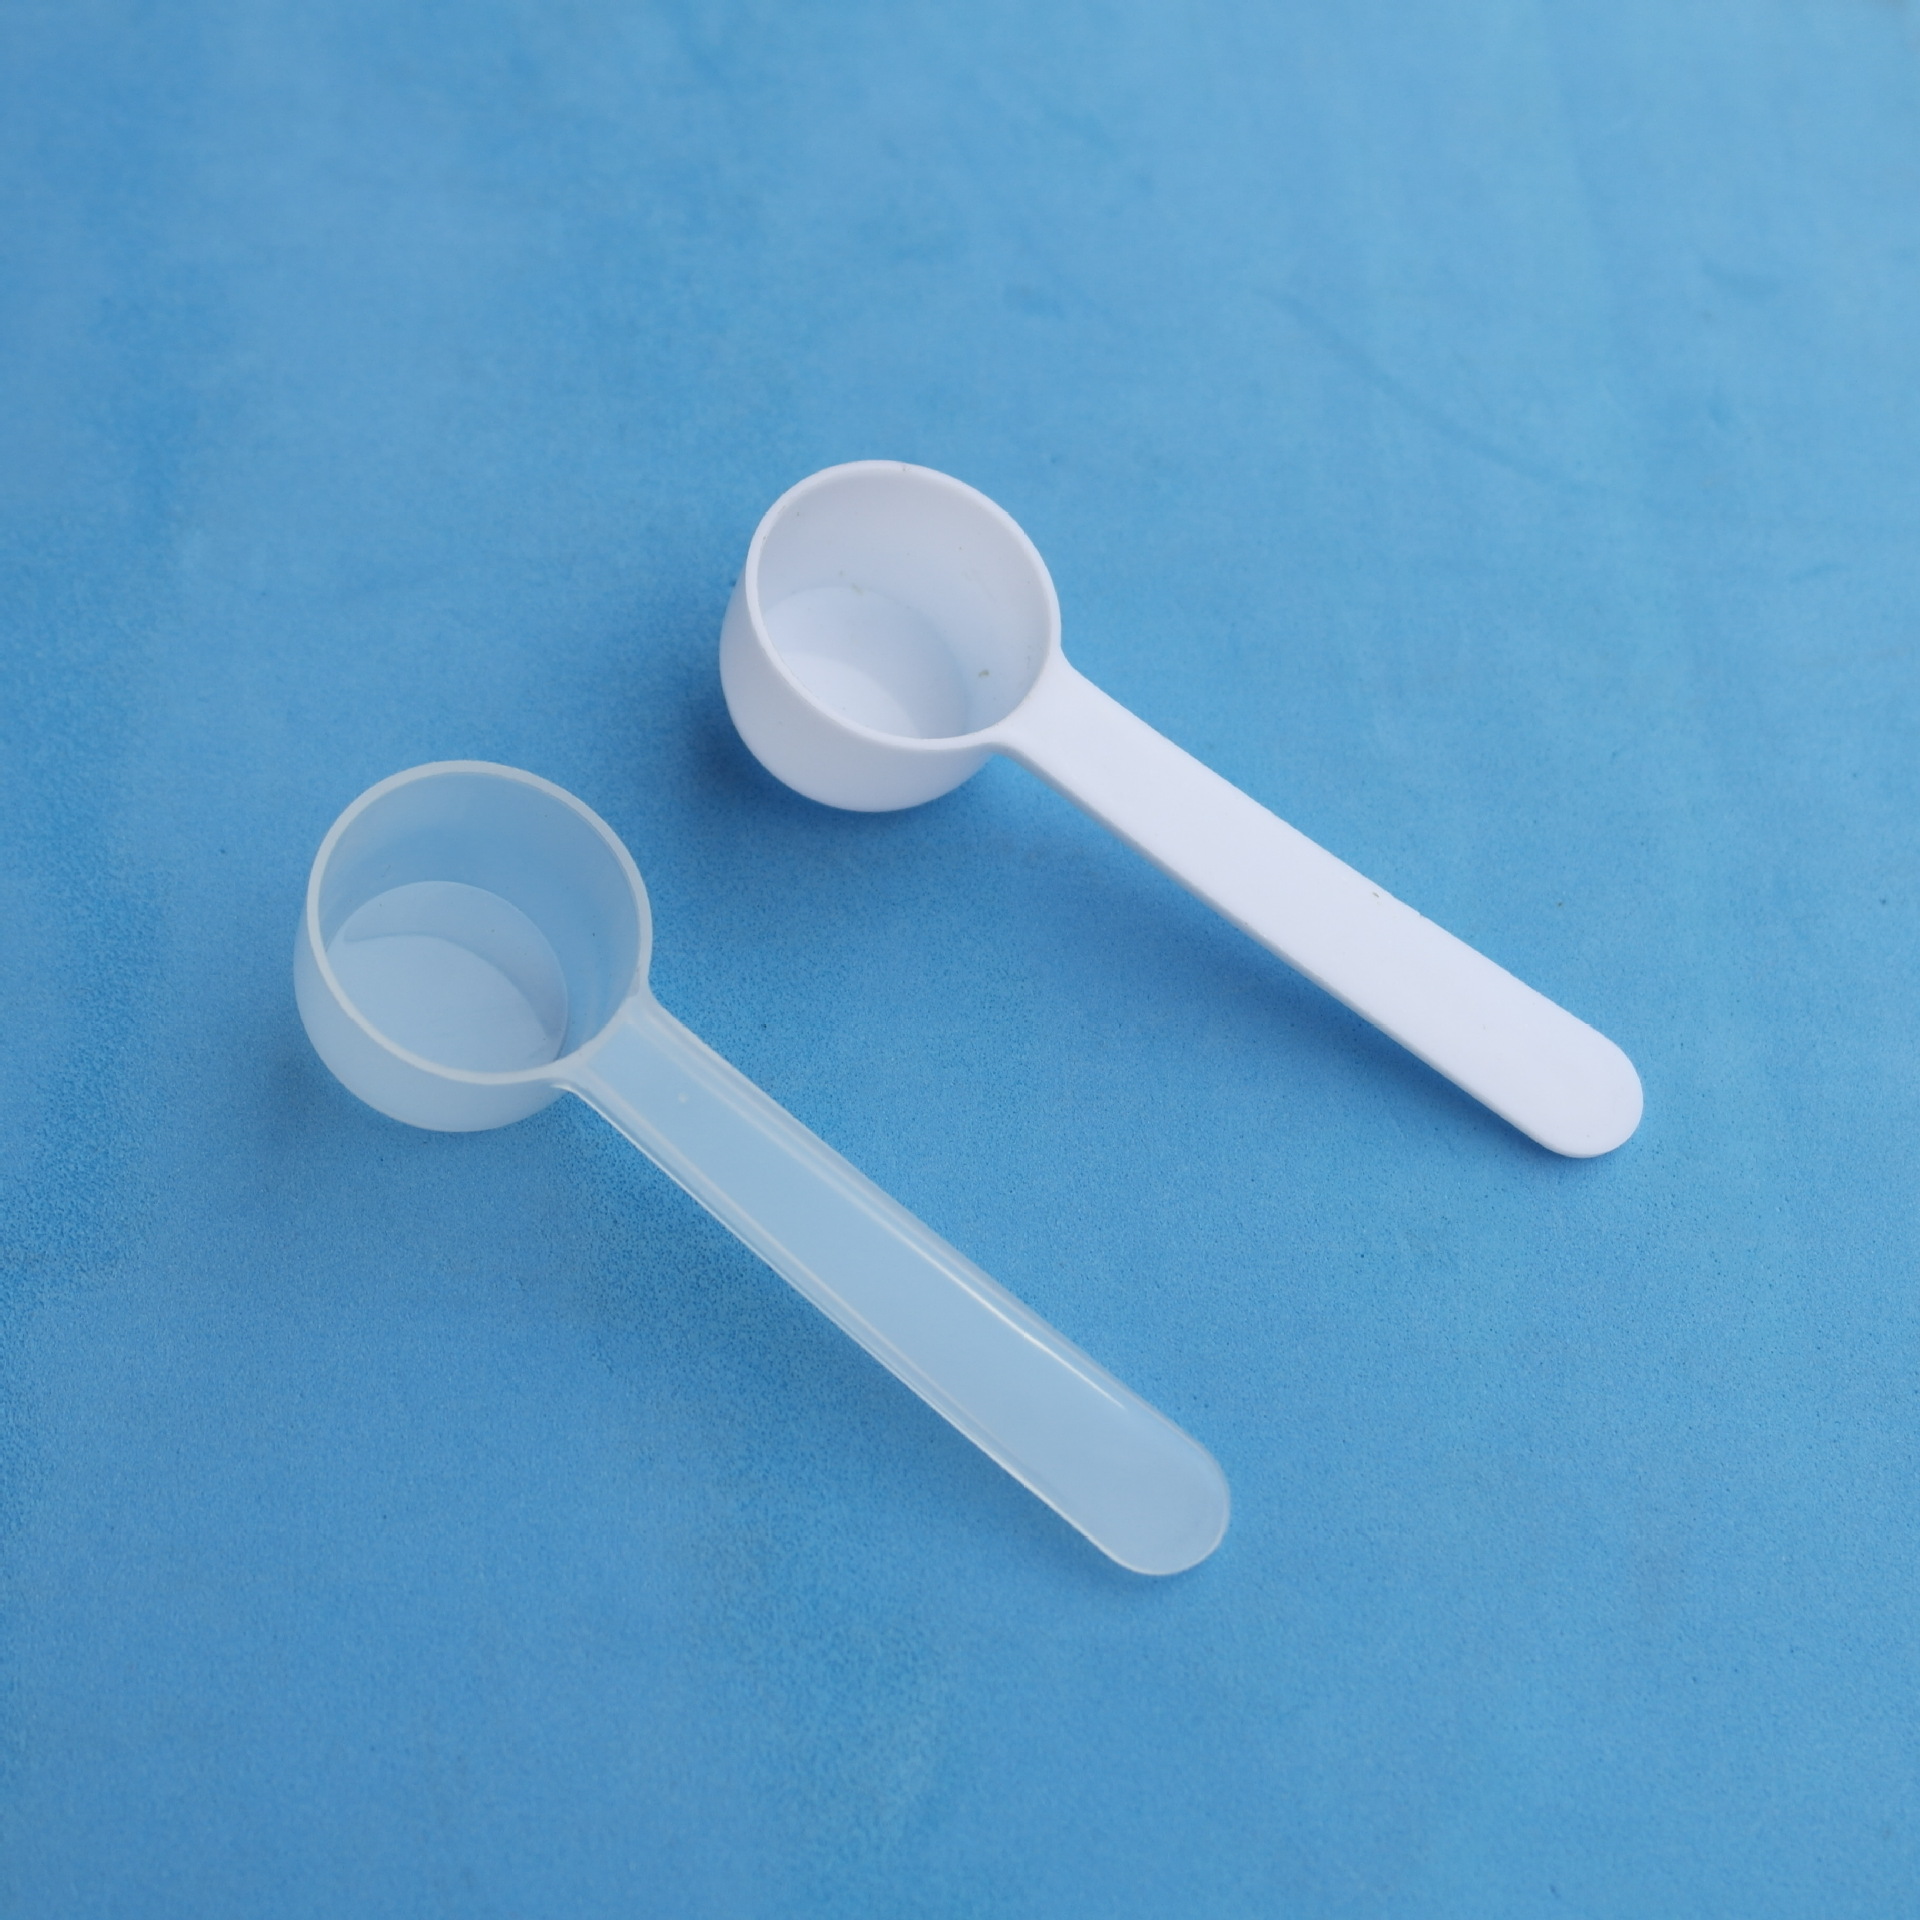 10ml塑料小勺,5g奶粉勺,粉剂量勺,5克塑胶量勺,pp塑料勺子